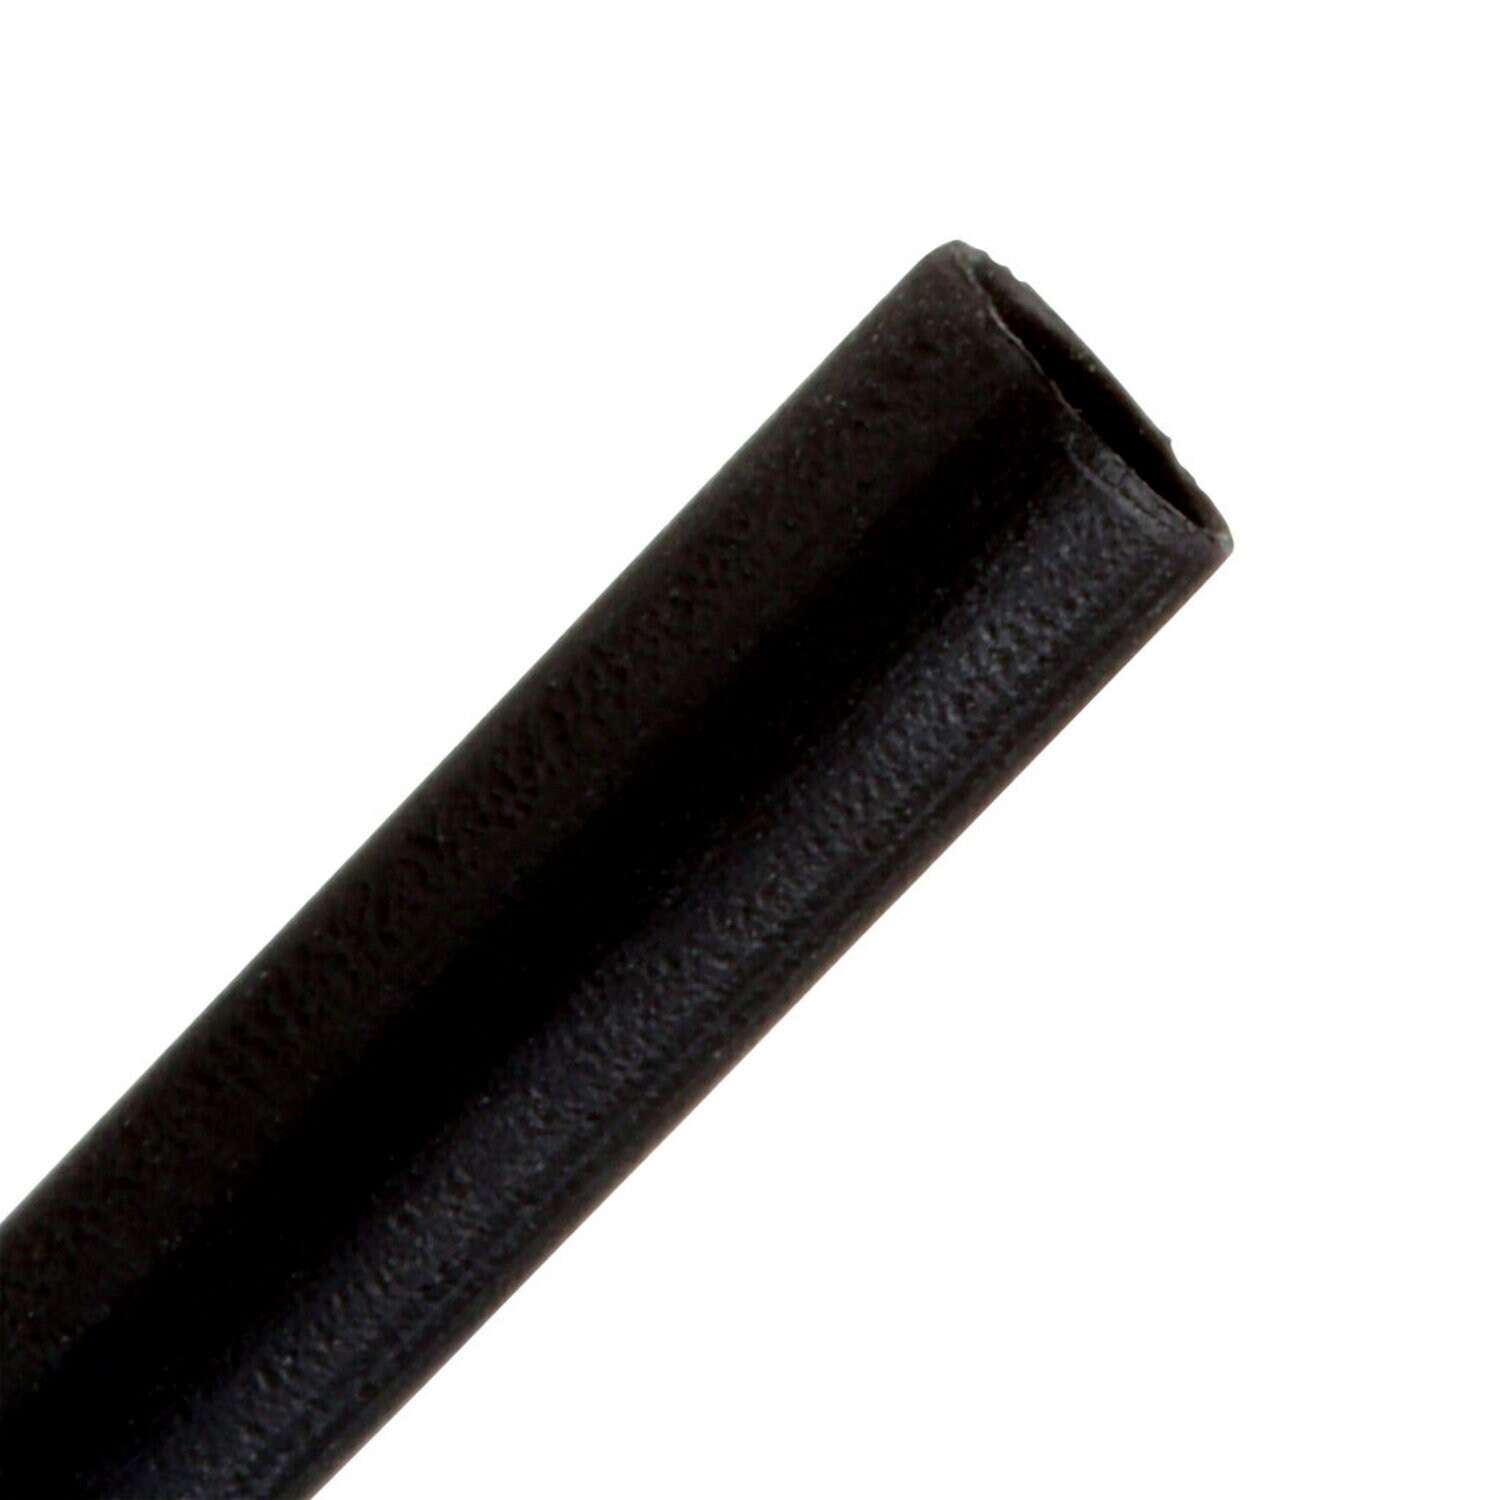 7100025699 - 3M Heat Shrink Thin-Wall Tubing FP-301-3/32-Black-100', 100 ft Length
per spool, 300 ft/case